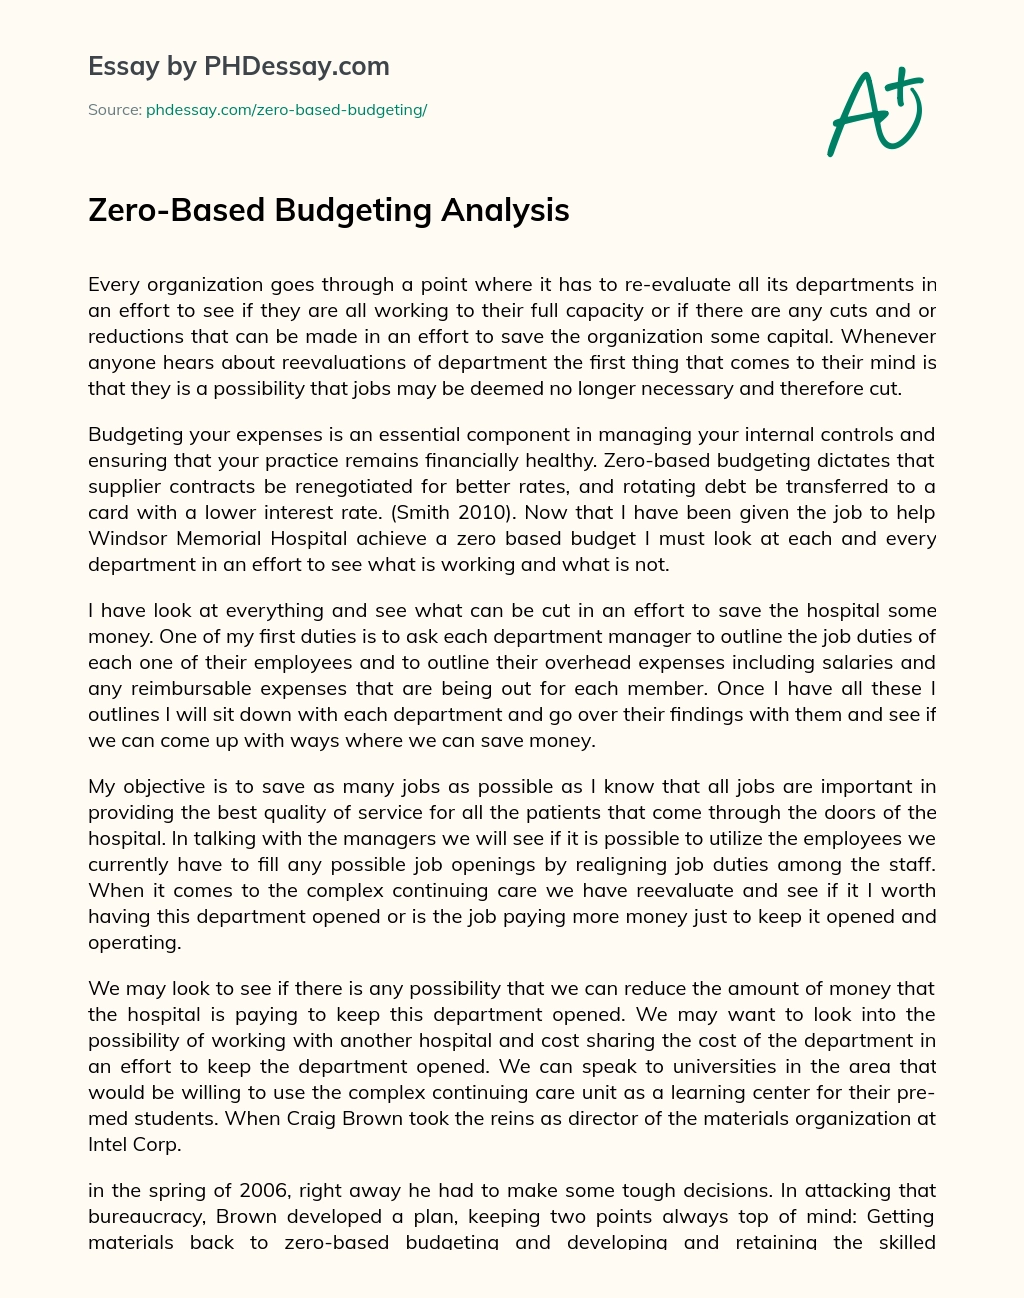 Zero-Based Budgeting Analysis essay